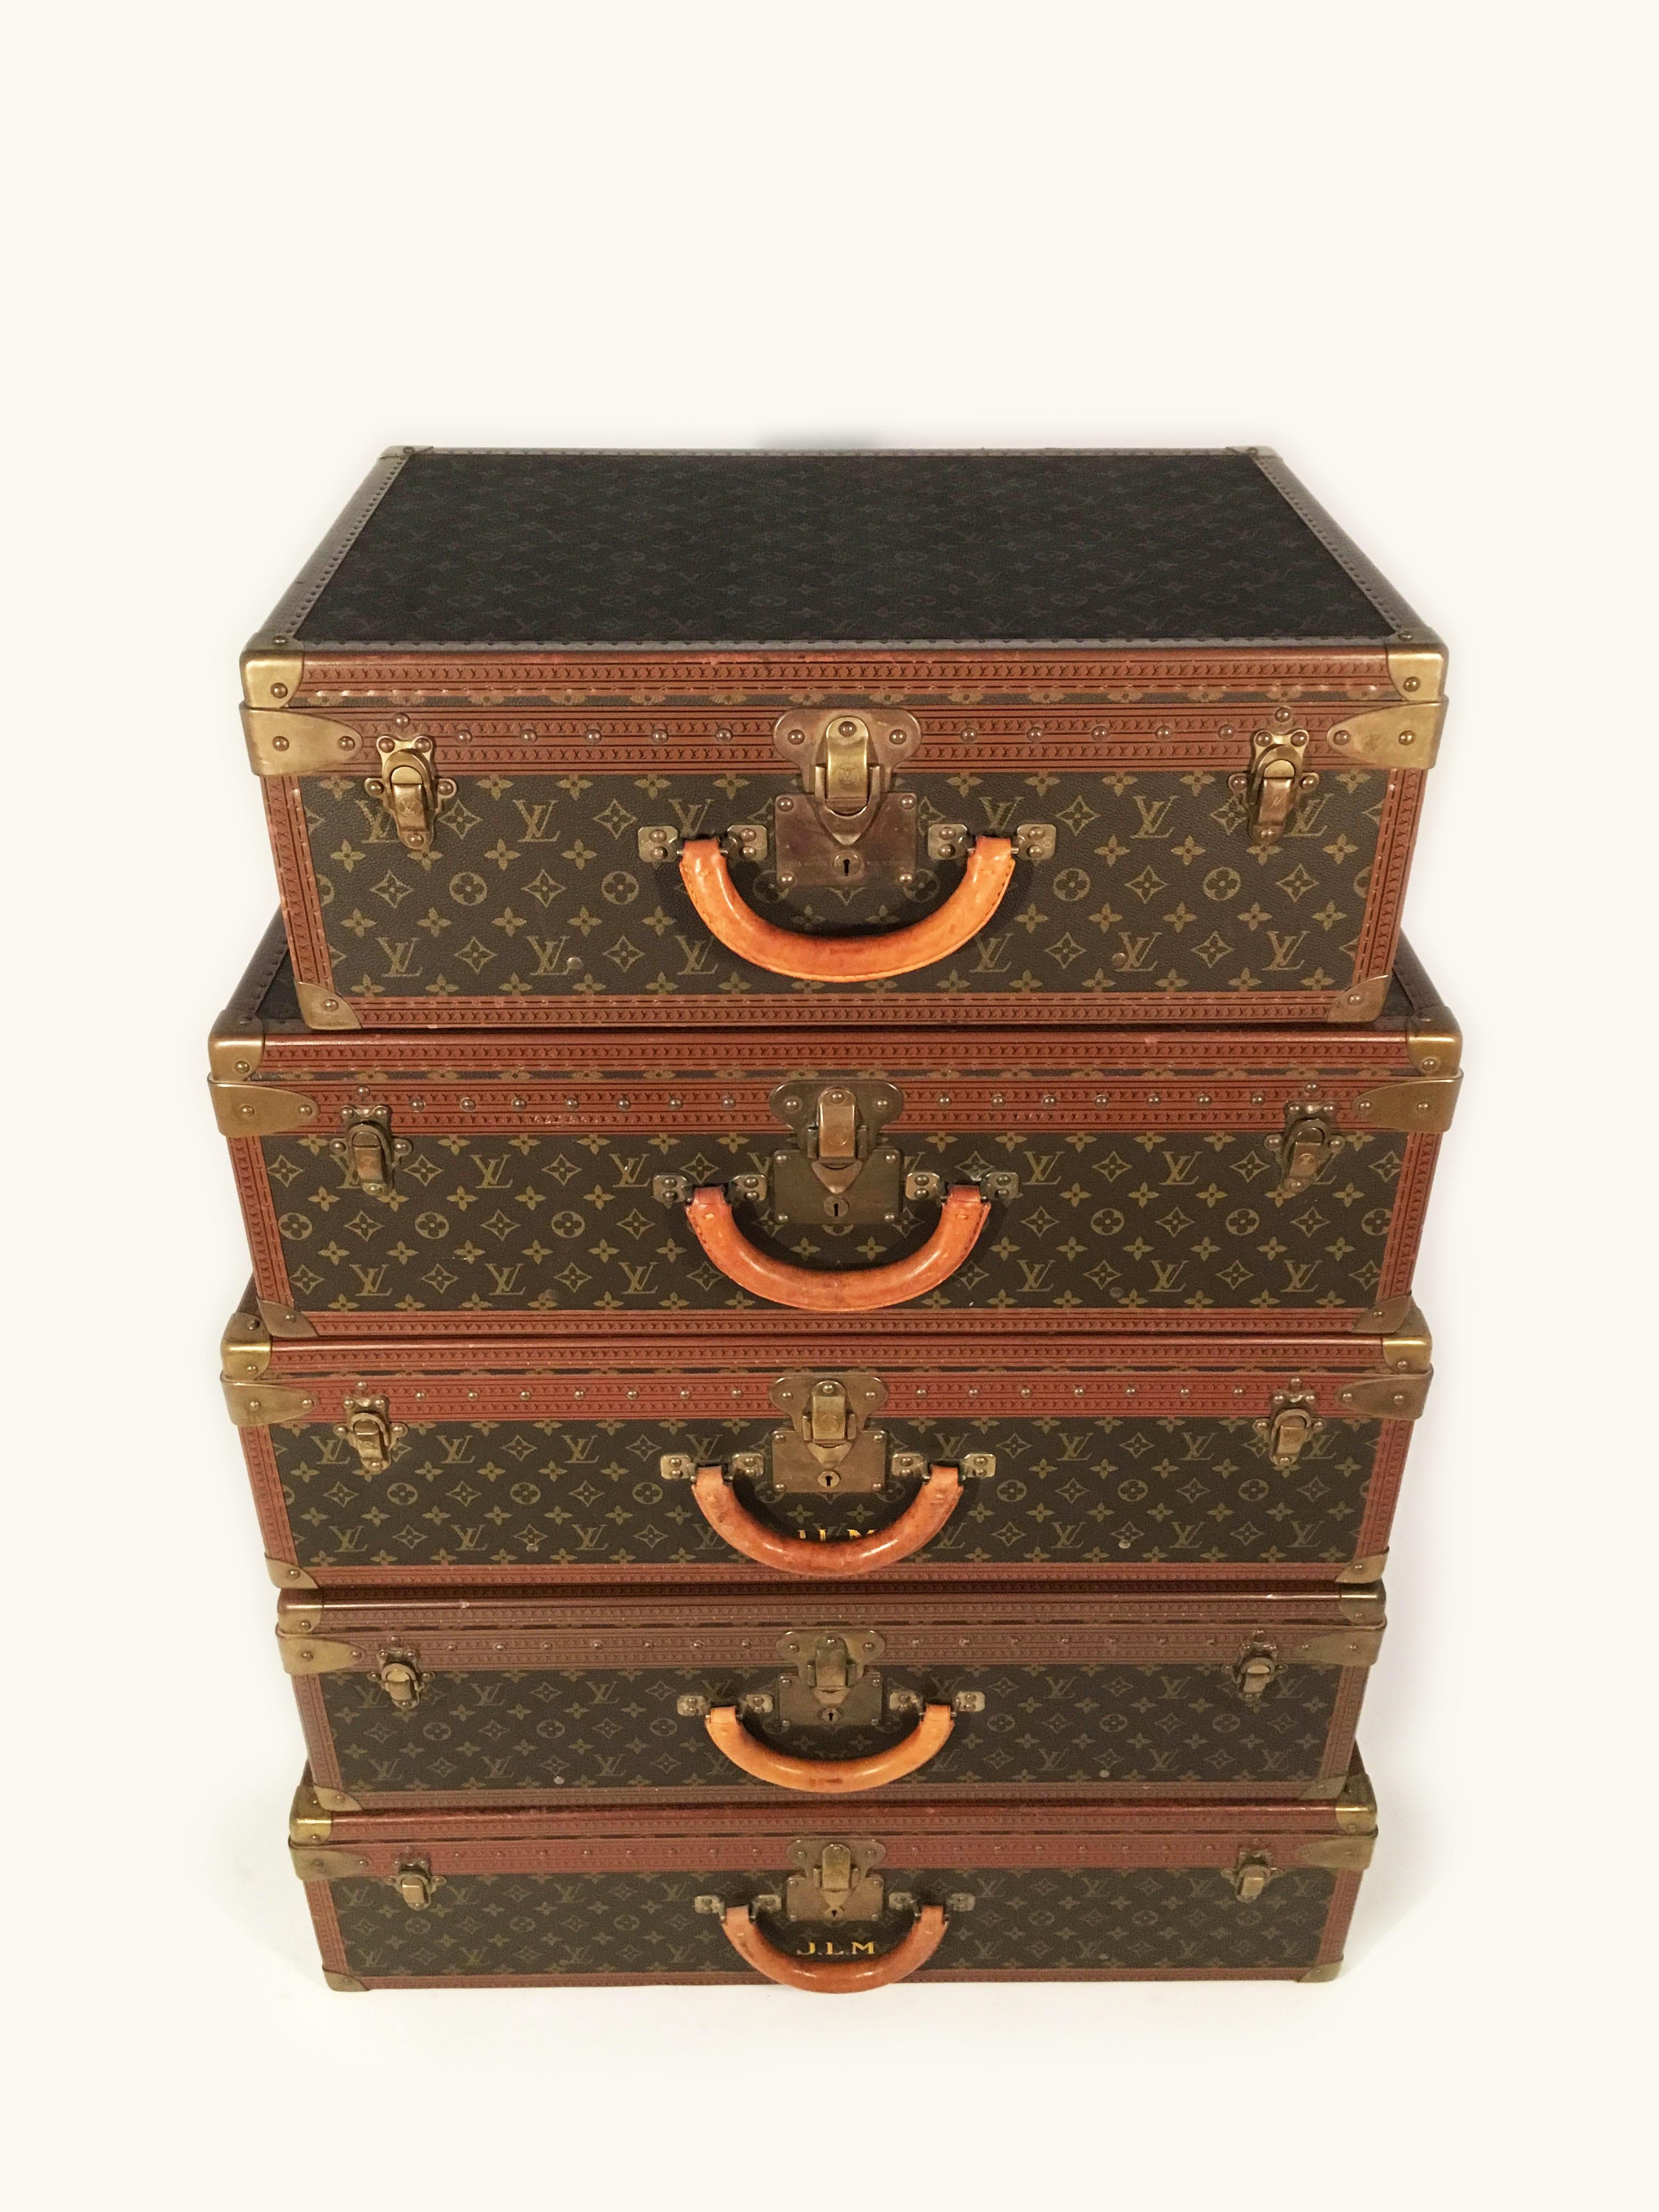 A Louis Vuitton Alzer five-piece suitcases collection. The 